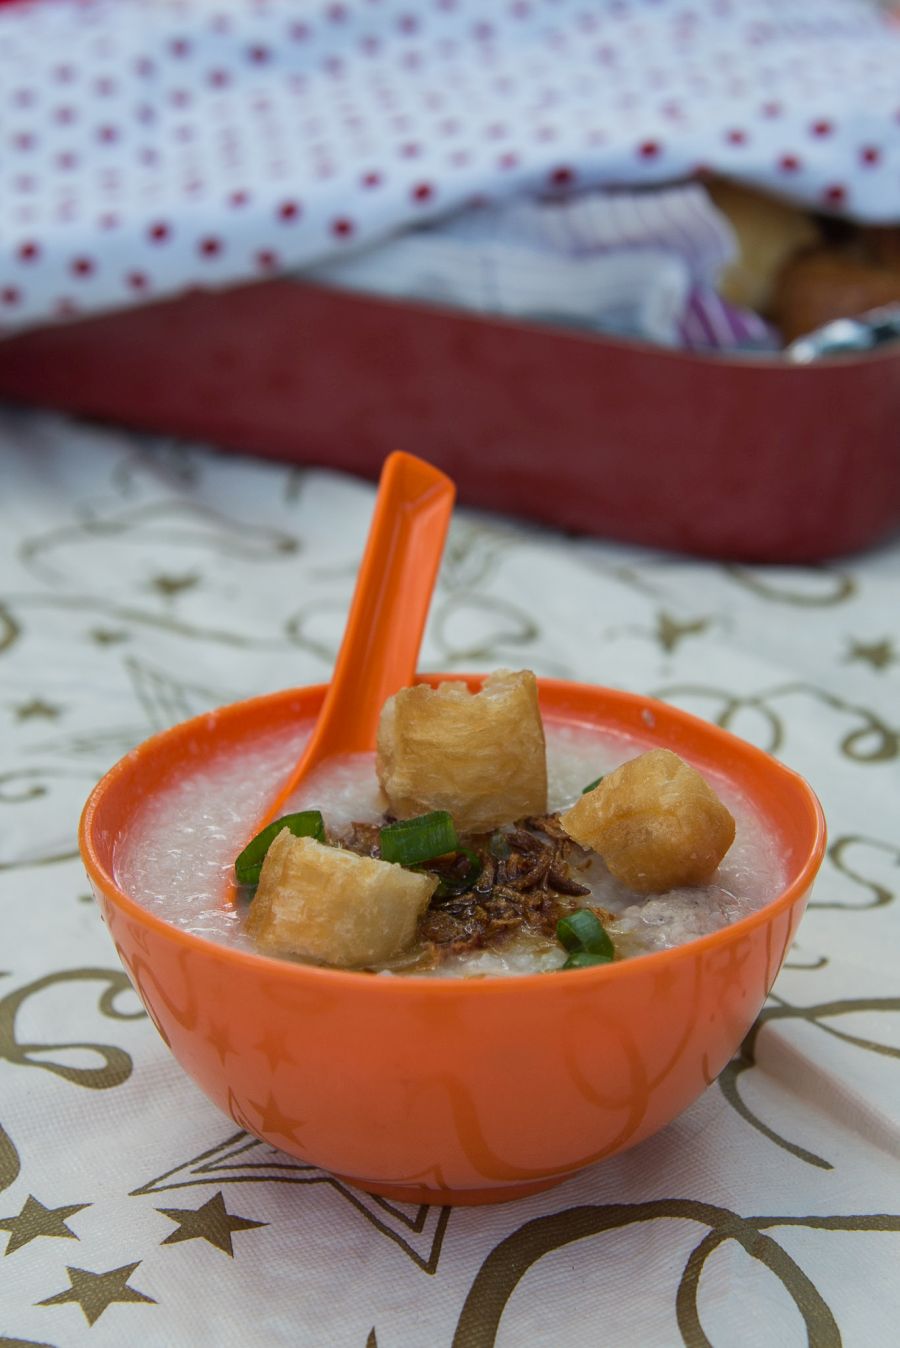 Rice porridge with pork meatballs and trimmings